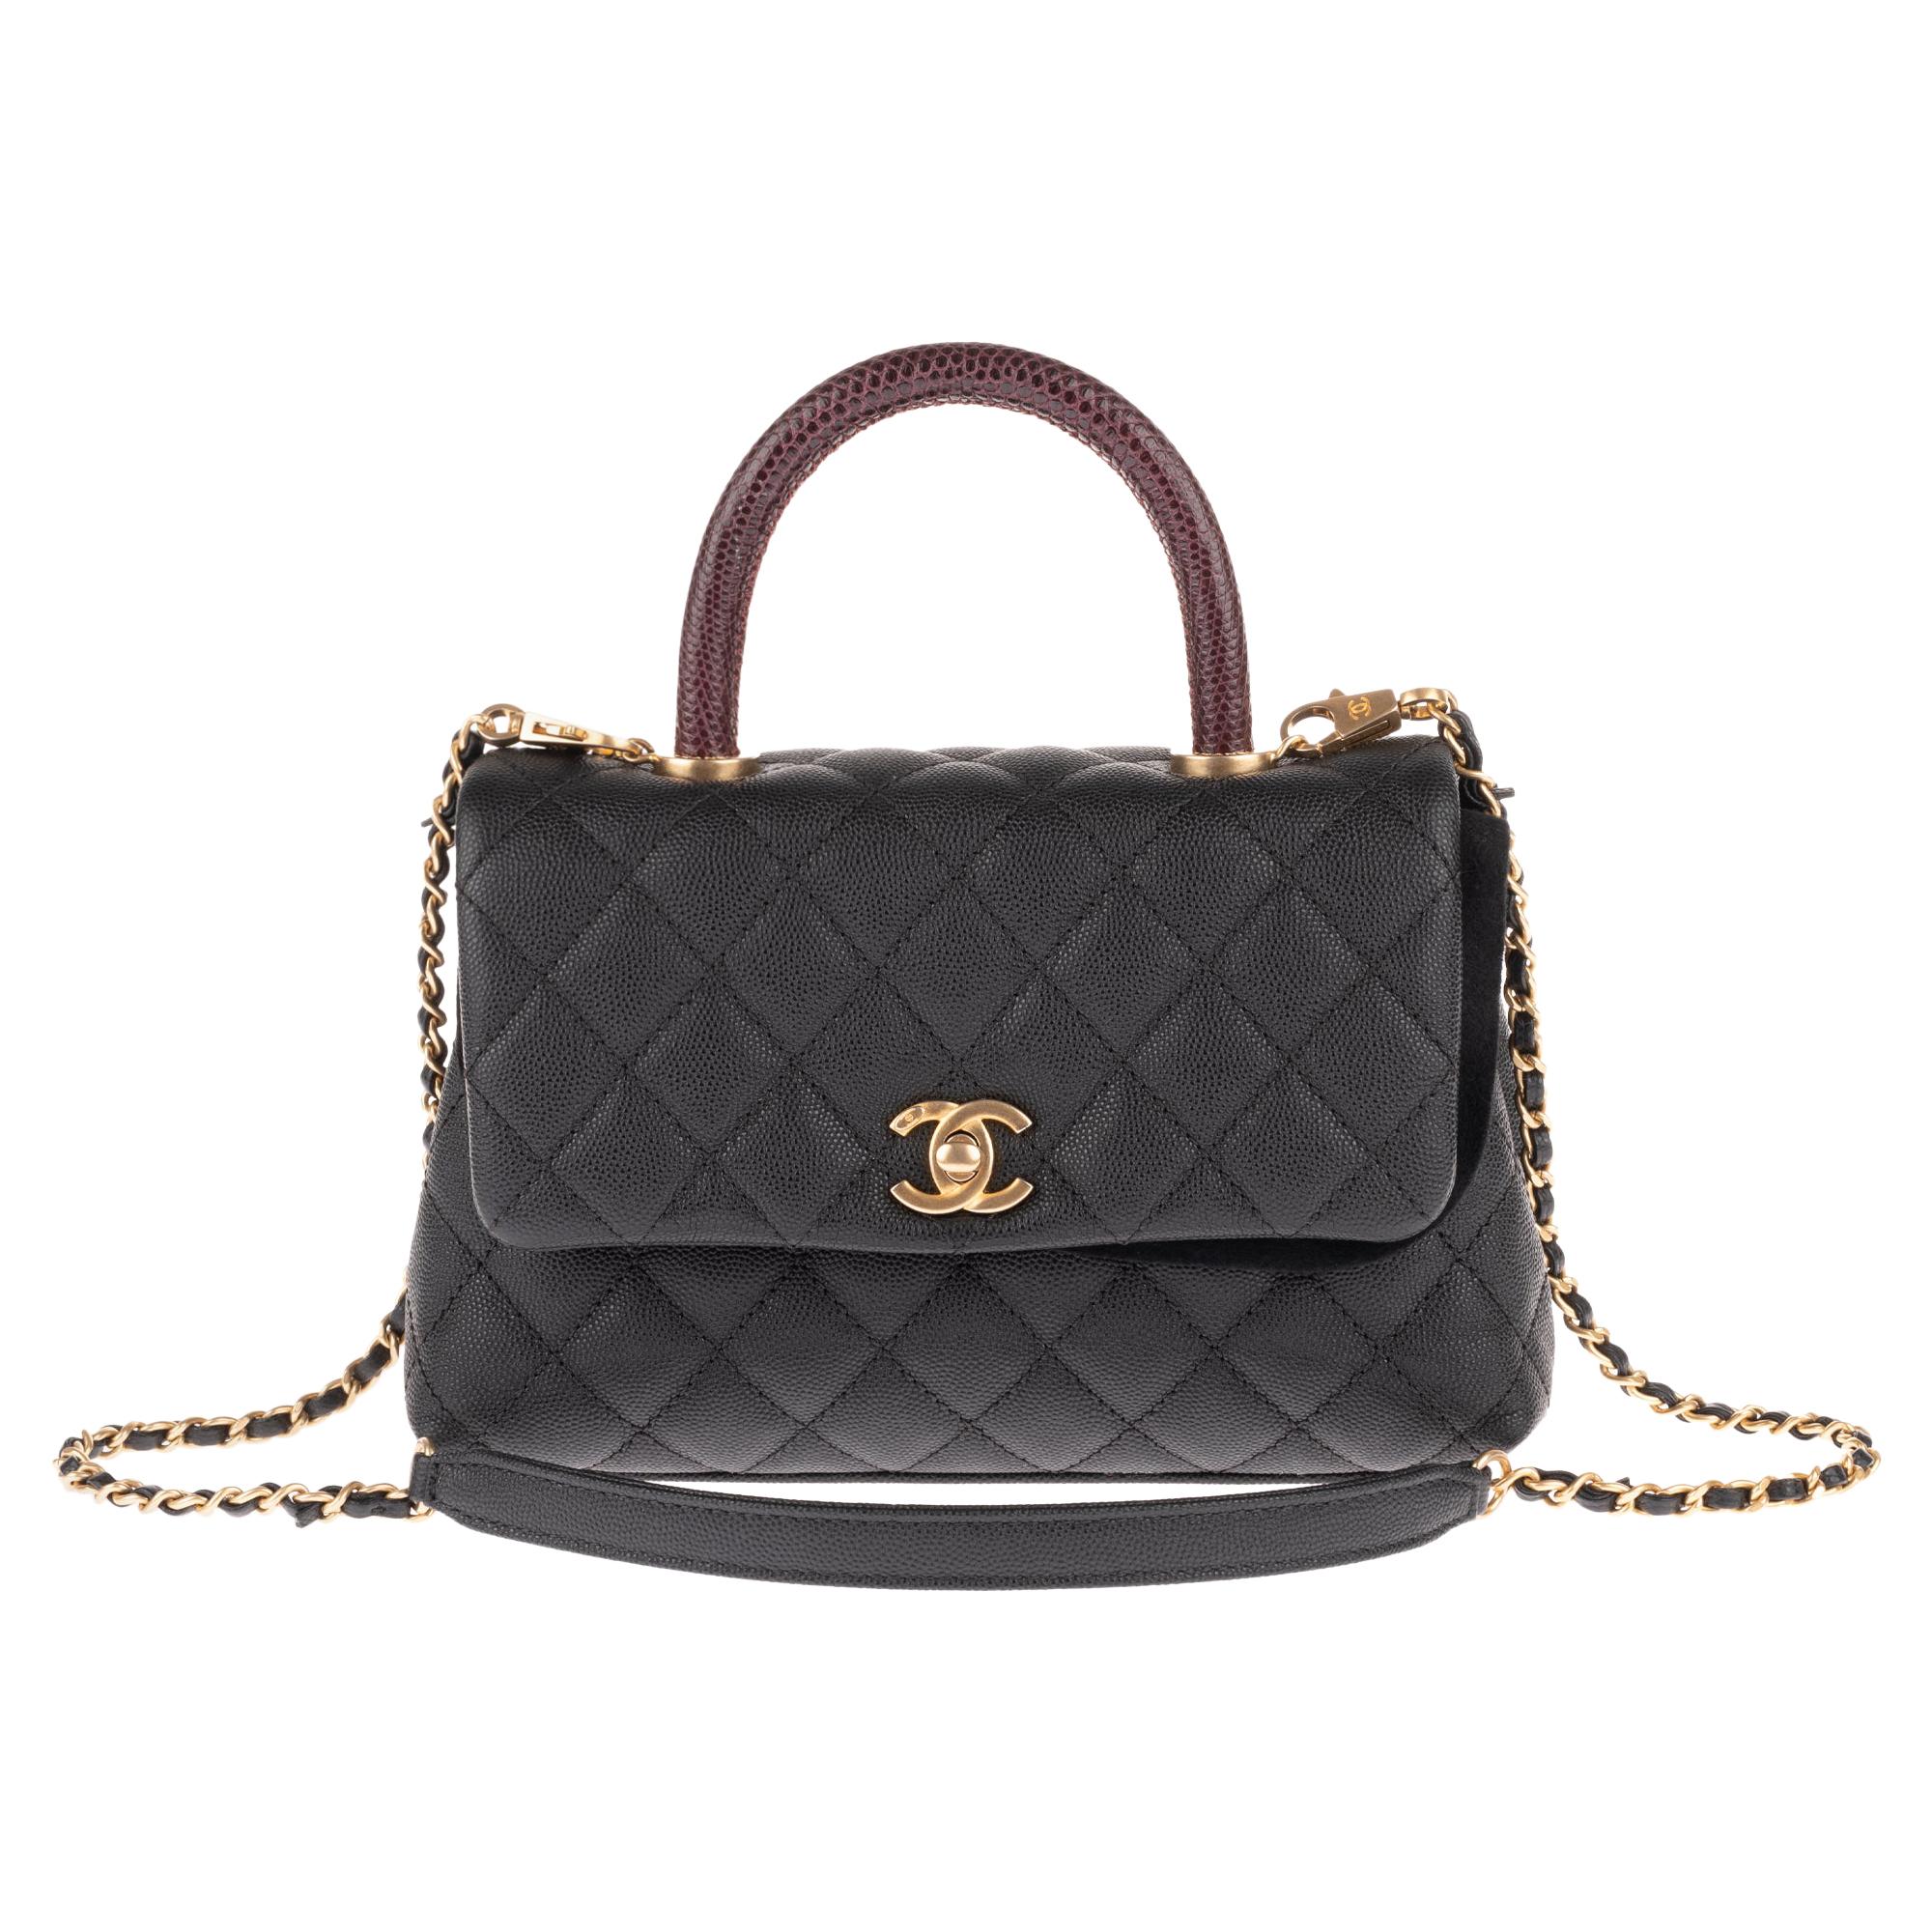 Amazing Chanel Coco handbag in black caviar leather, handle in brown lizard  !